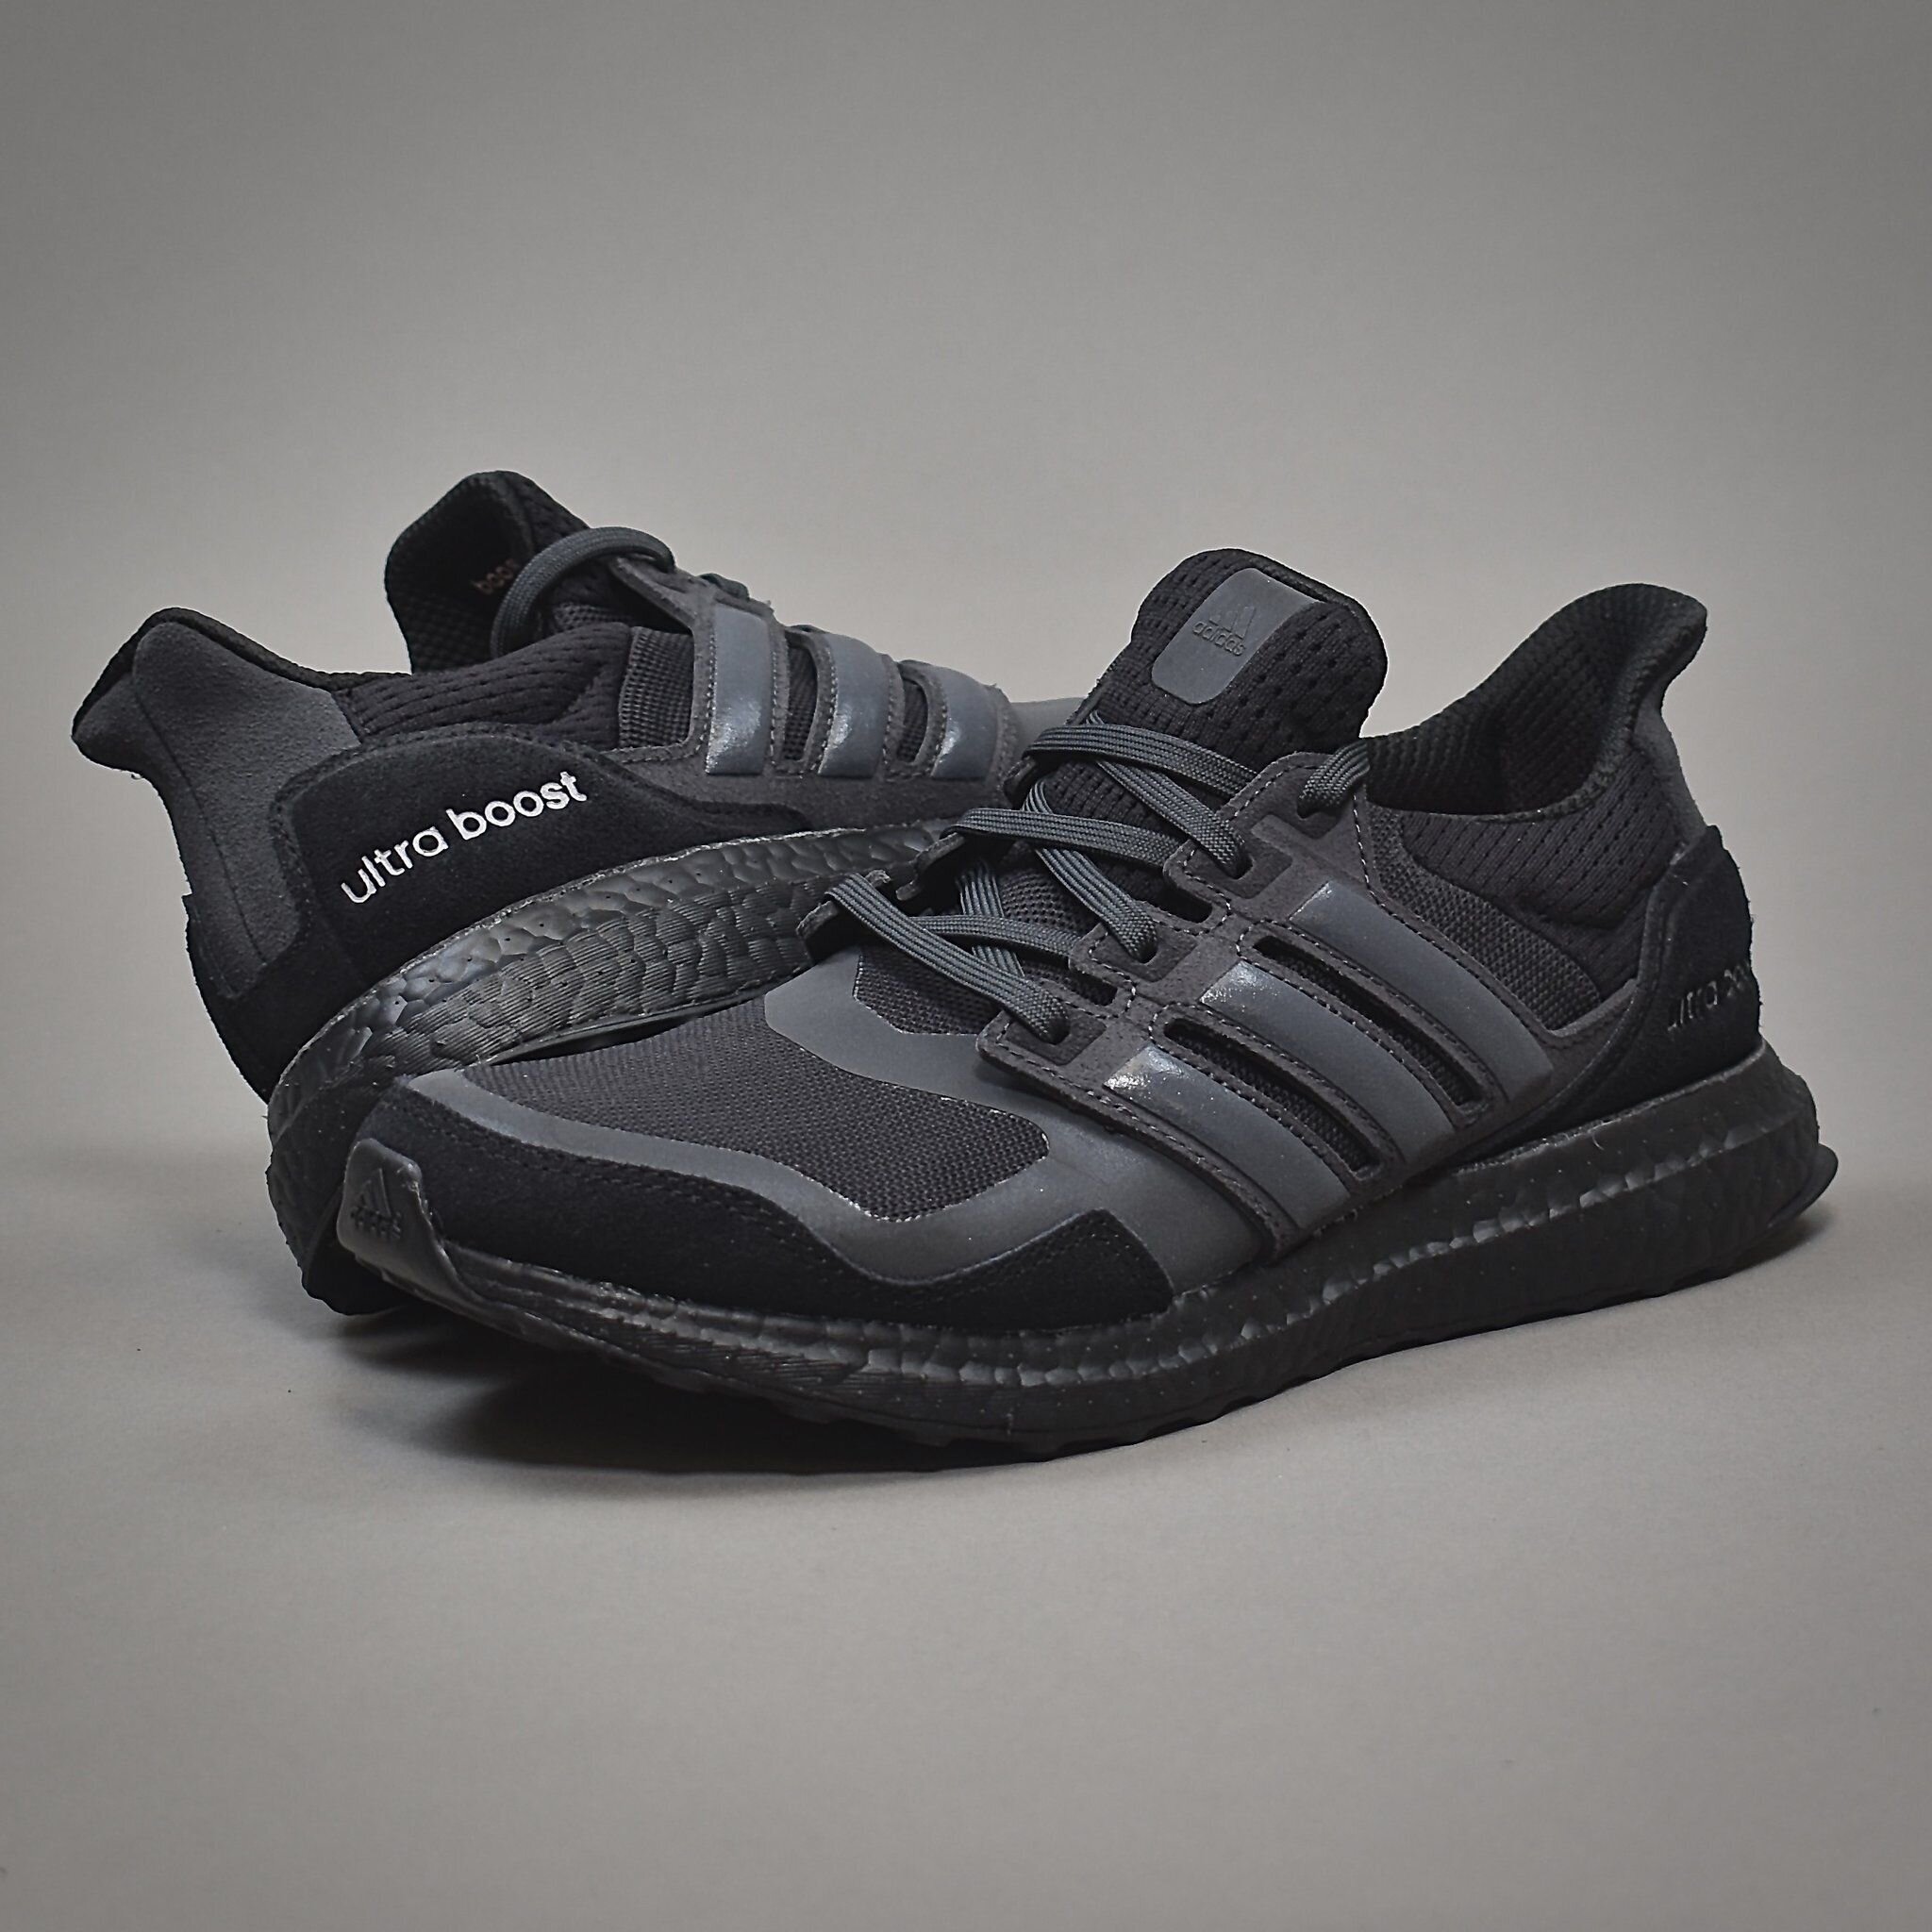 ultraboost s&l shoes black